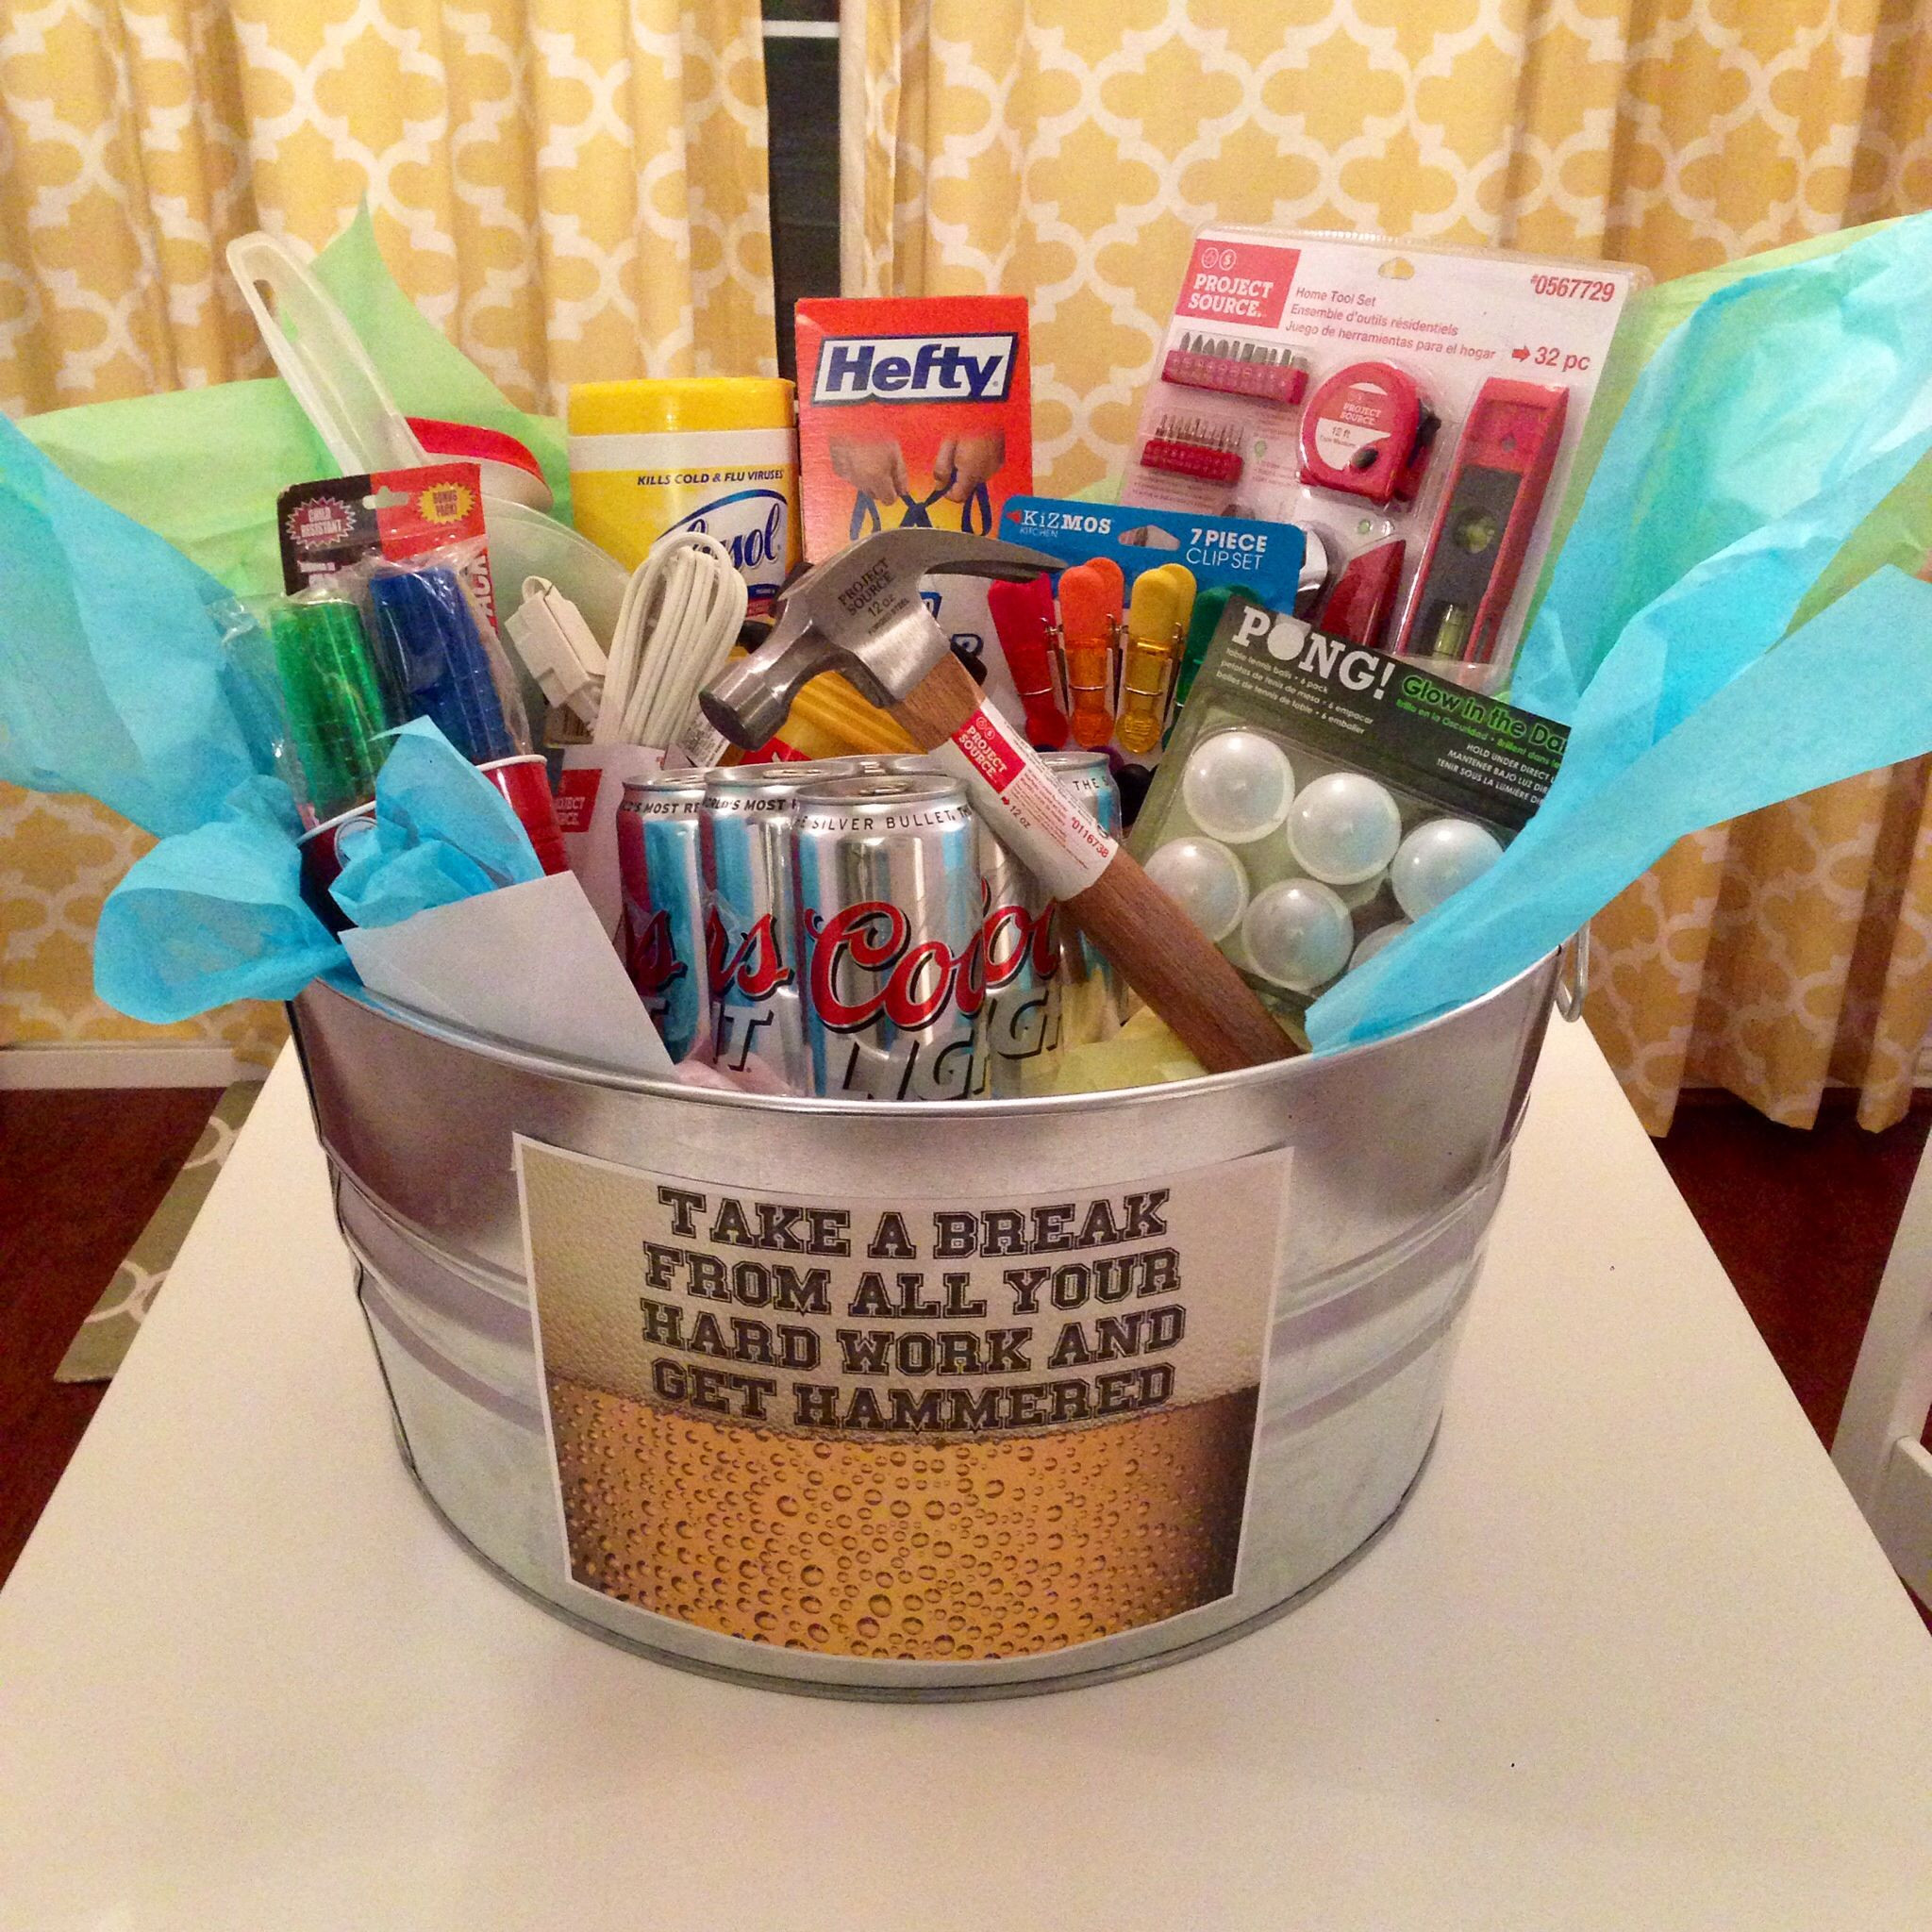 Welcome Home Gift Basket Ideas
 The housewarming basket I made my boyfriend